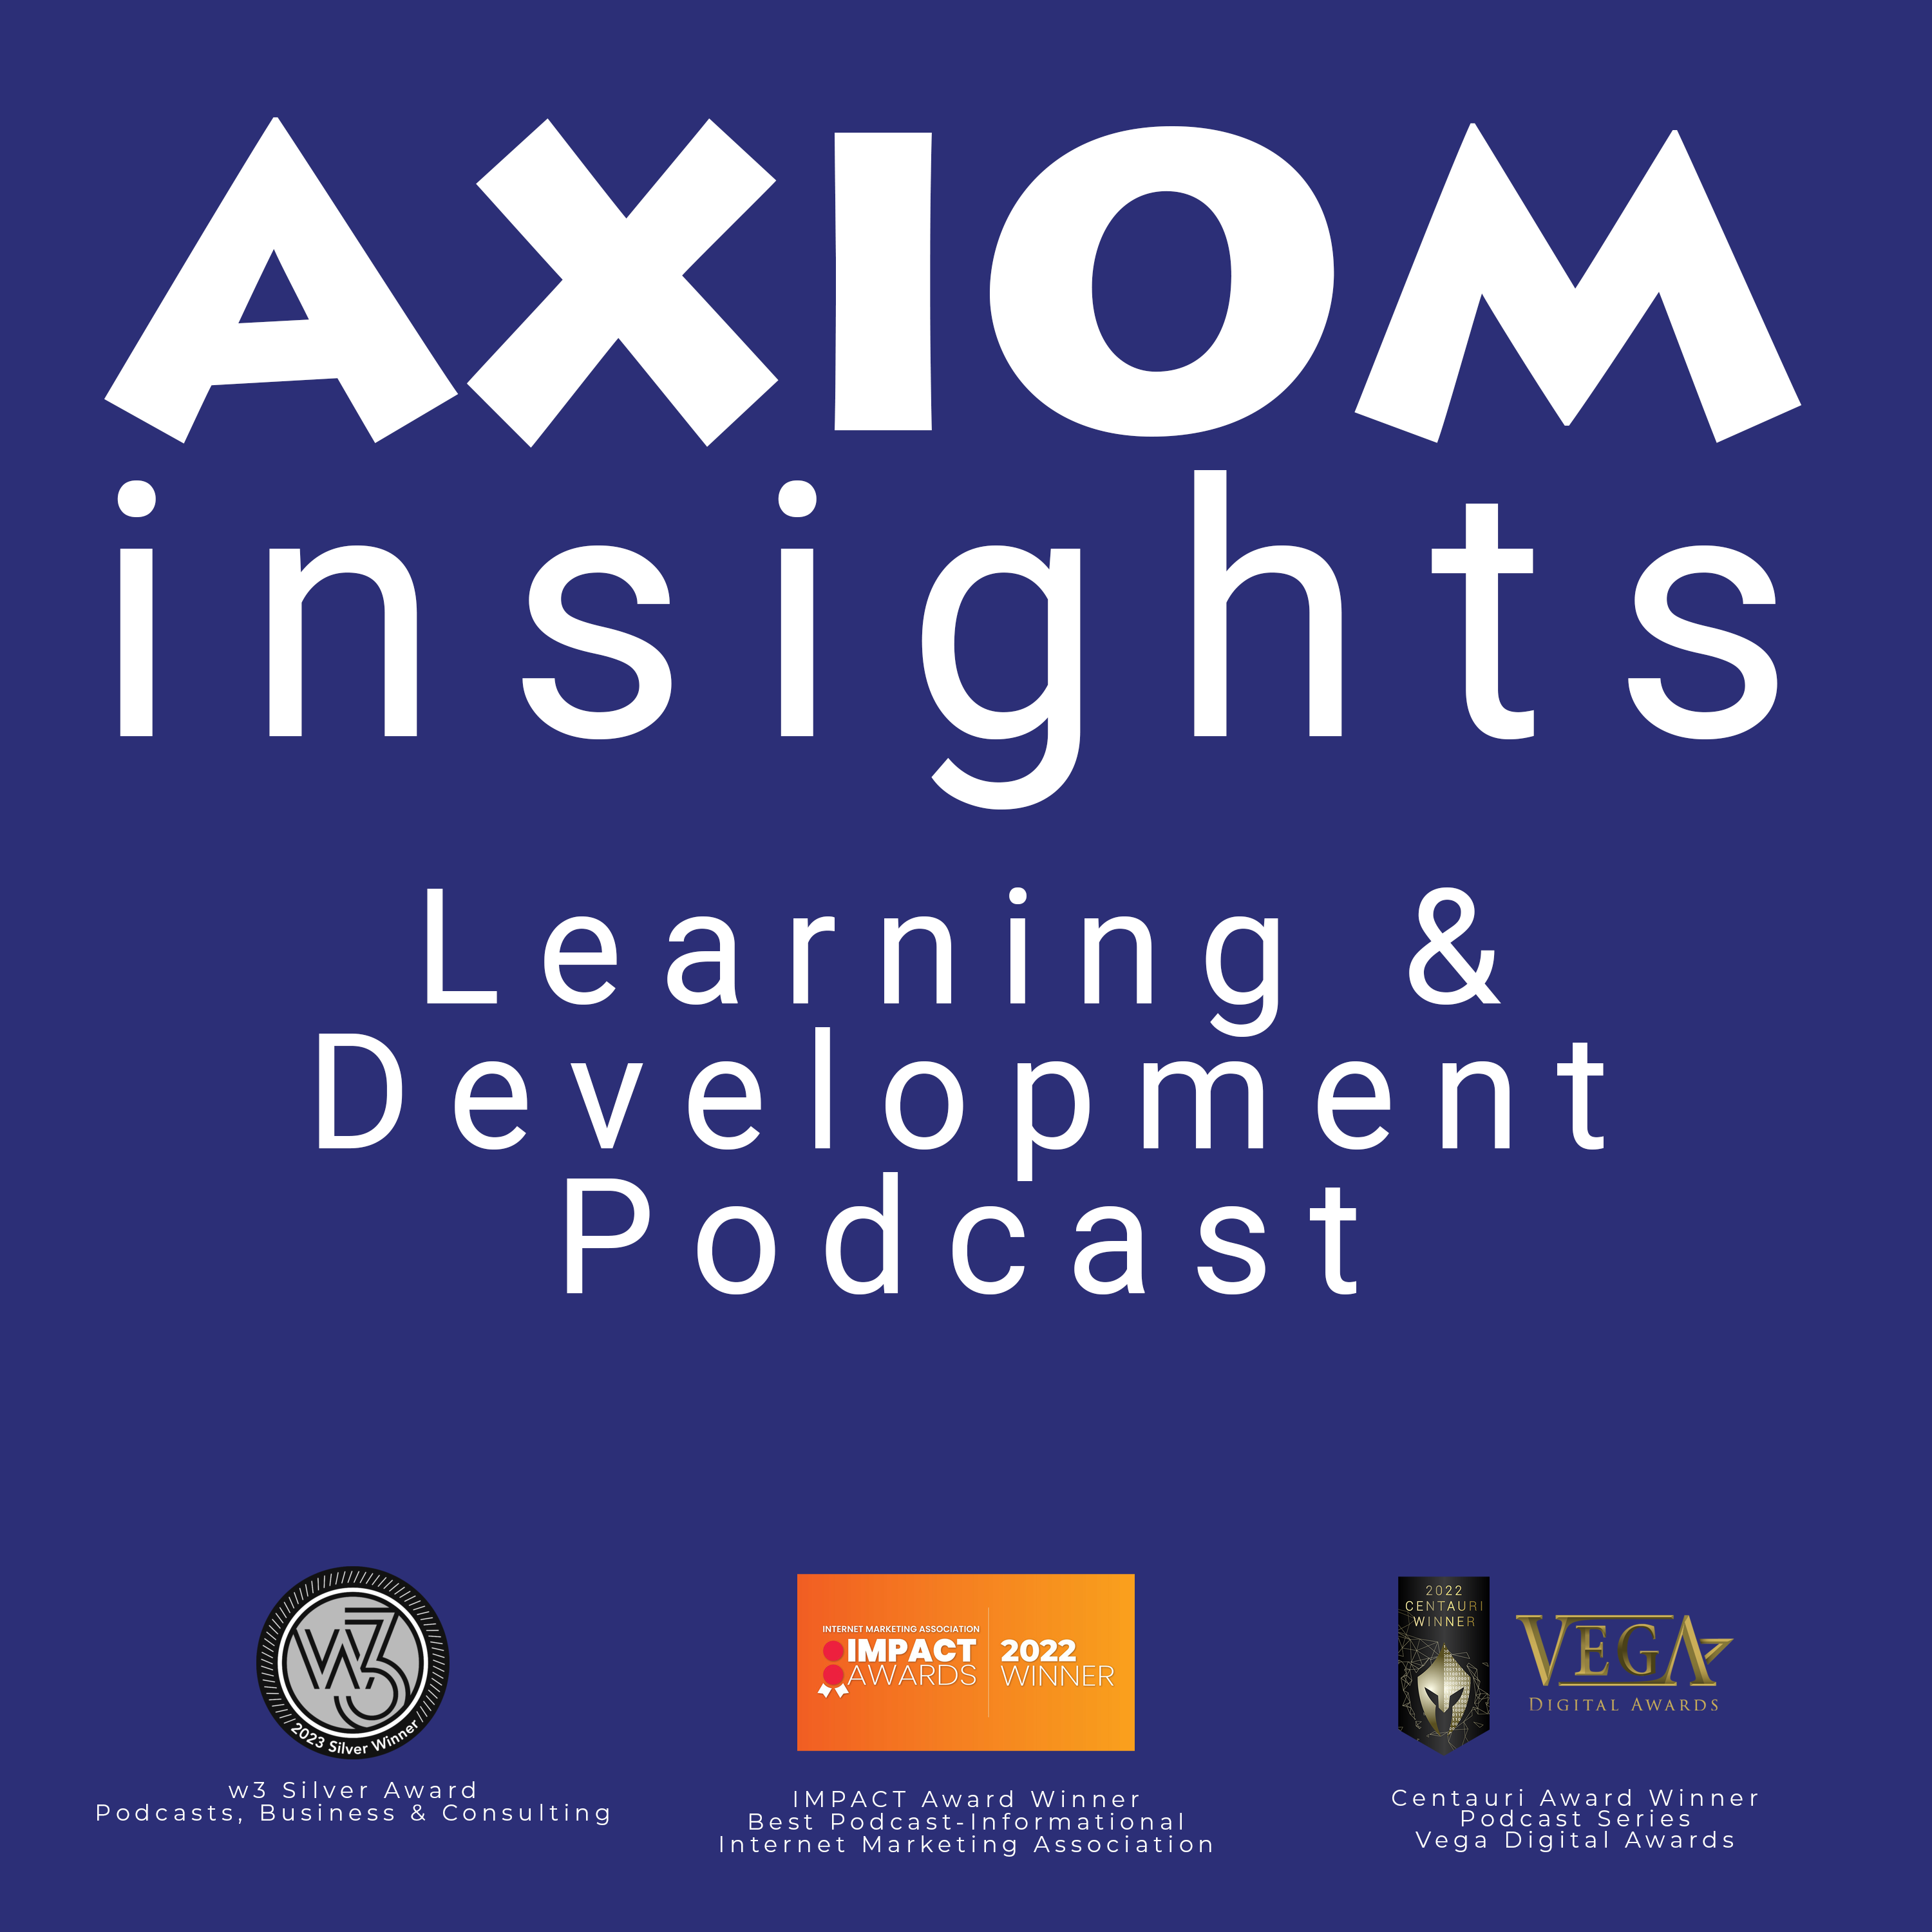 AXIOM Insights Podcast with Award Badges - 2023 w3 Silver, 2022 Internet Marketing Association IMPACT Award, 2022 Vega Digital Award